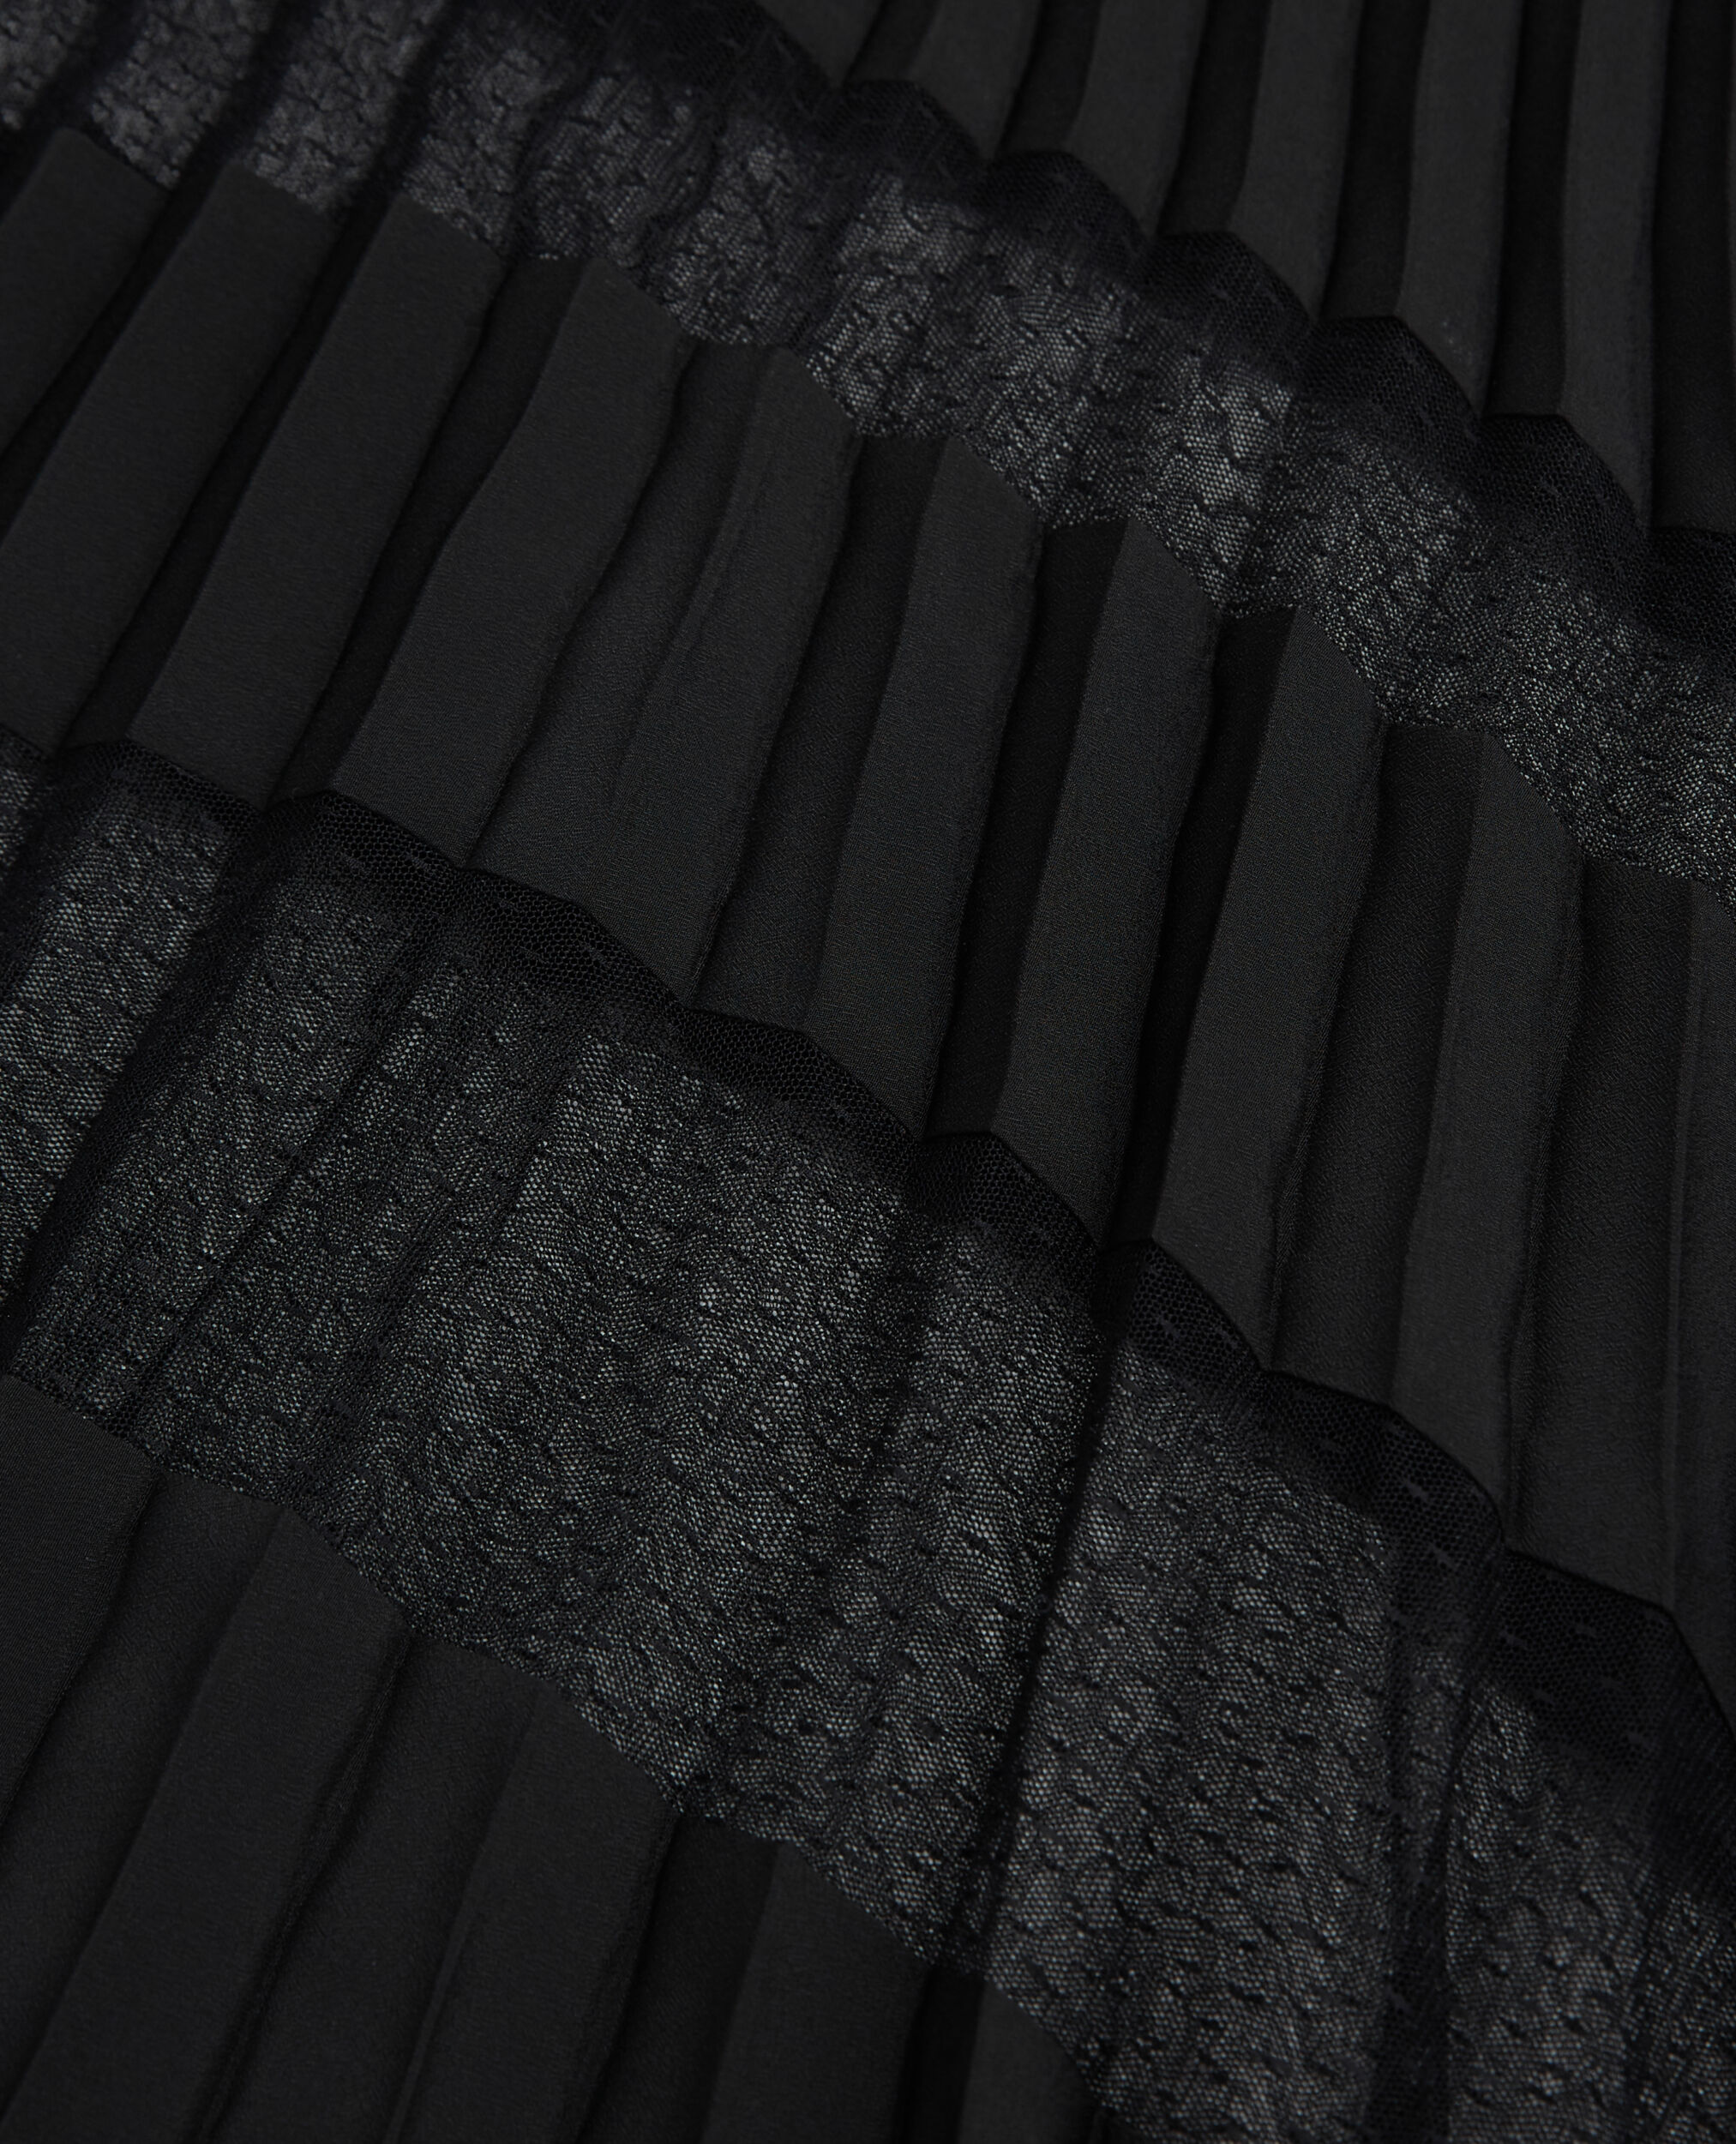 Falda larga plisada negra, BLACK, hi-res image number null